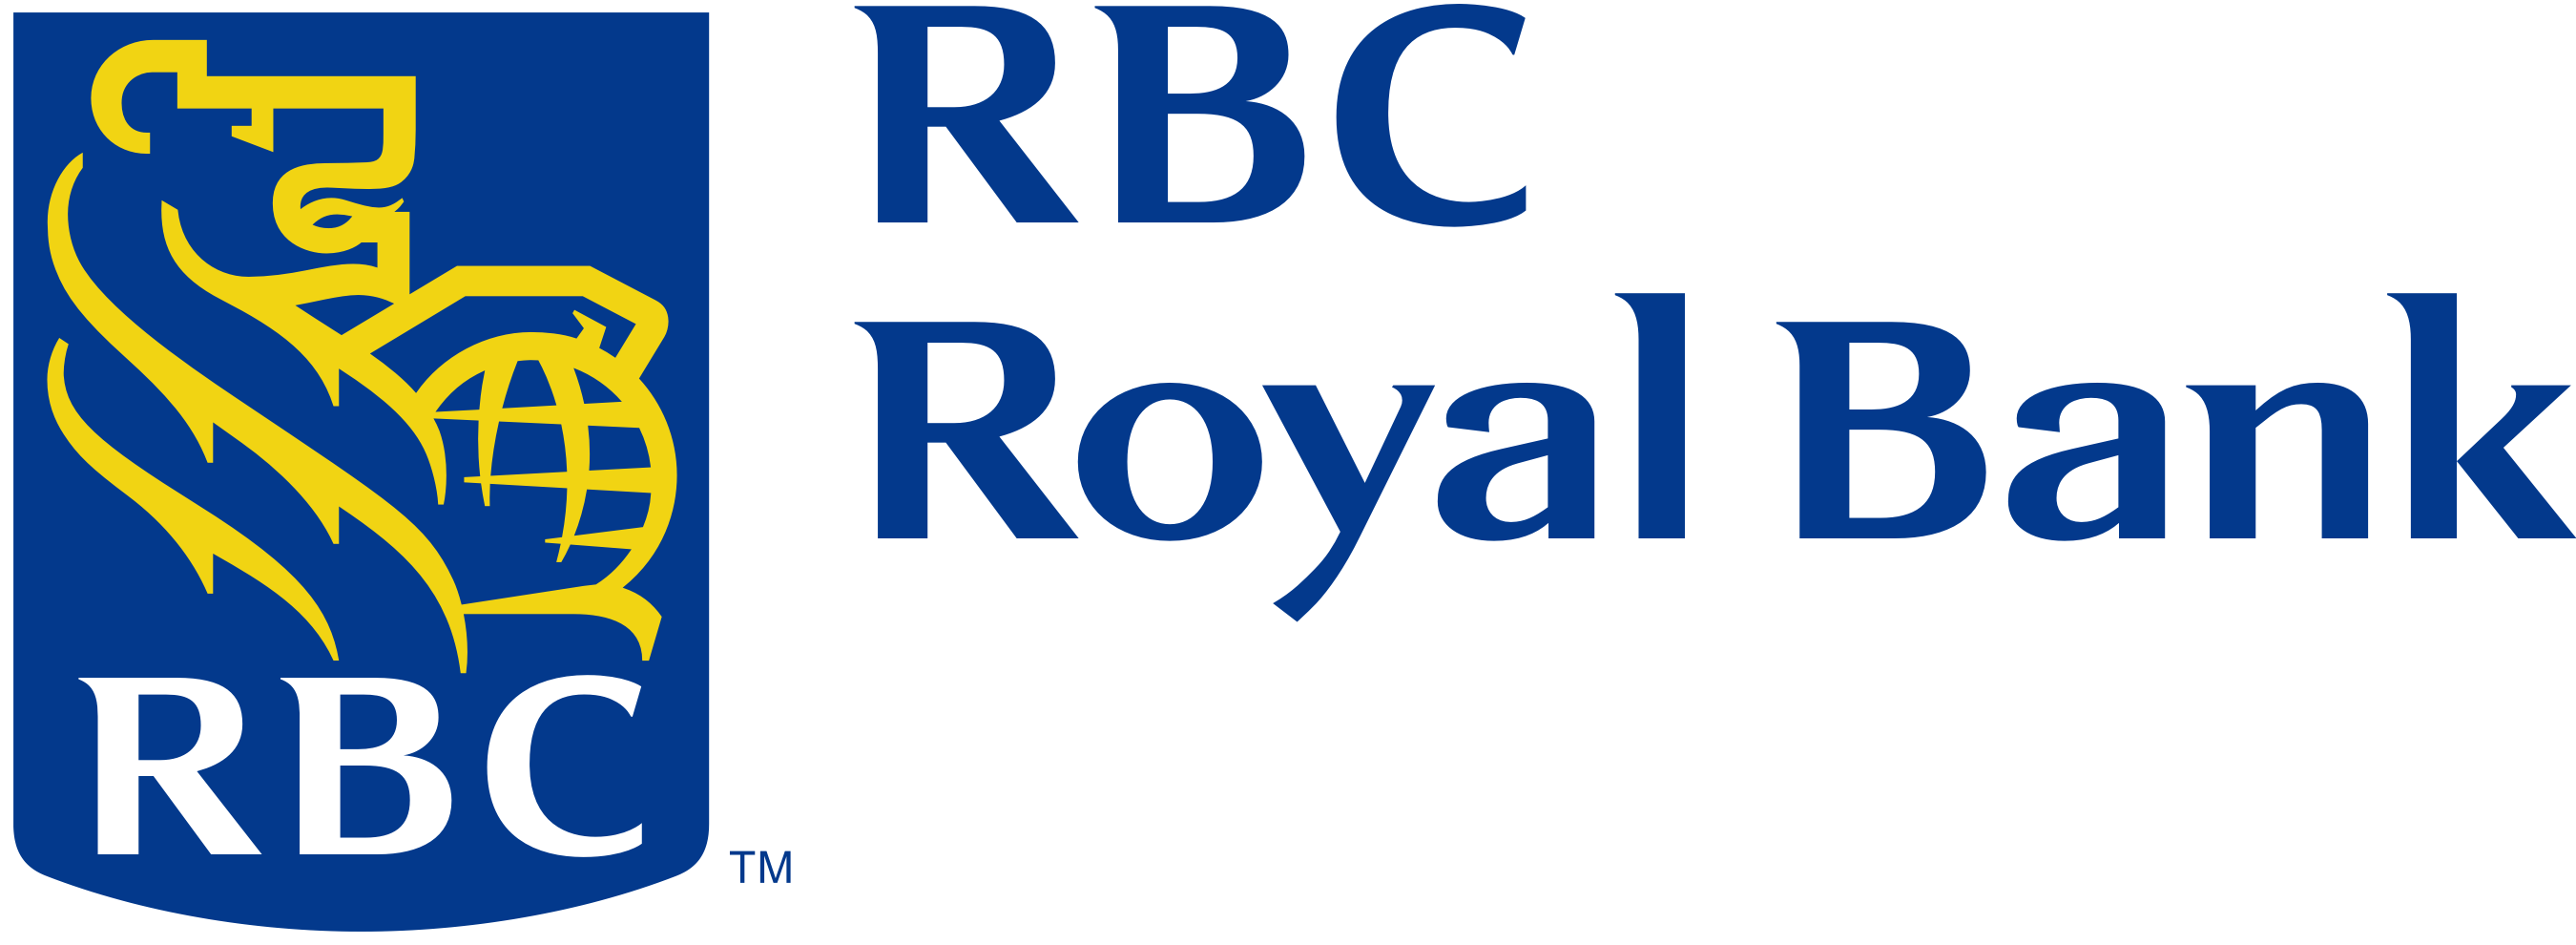 RBC Royal Bank logo.